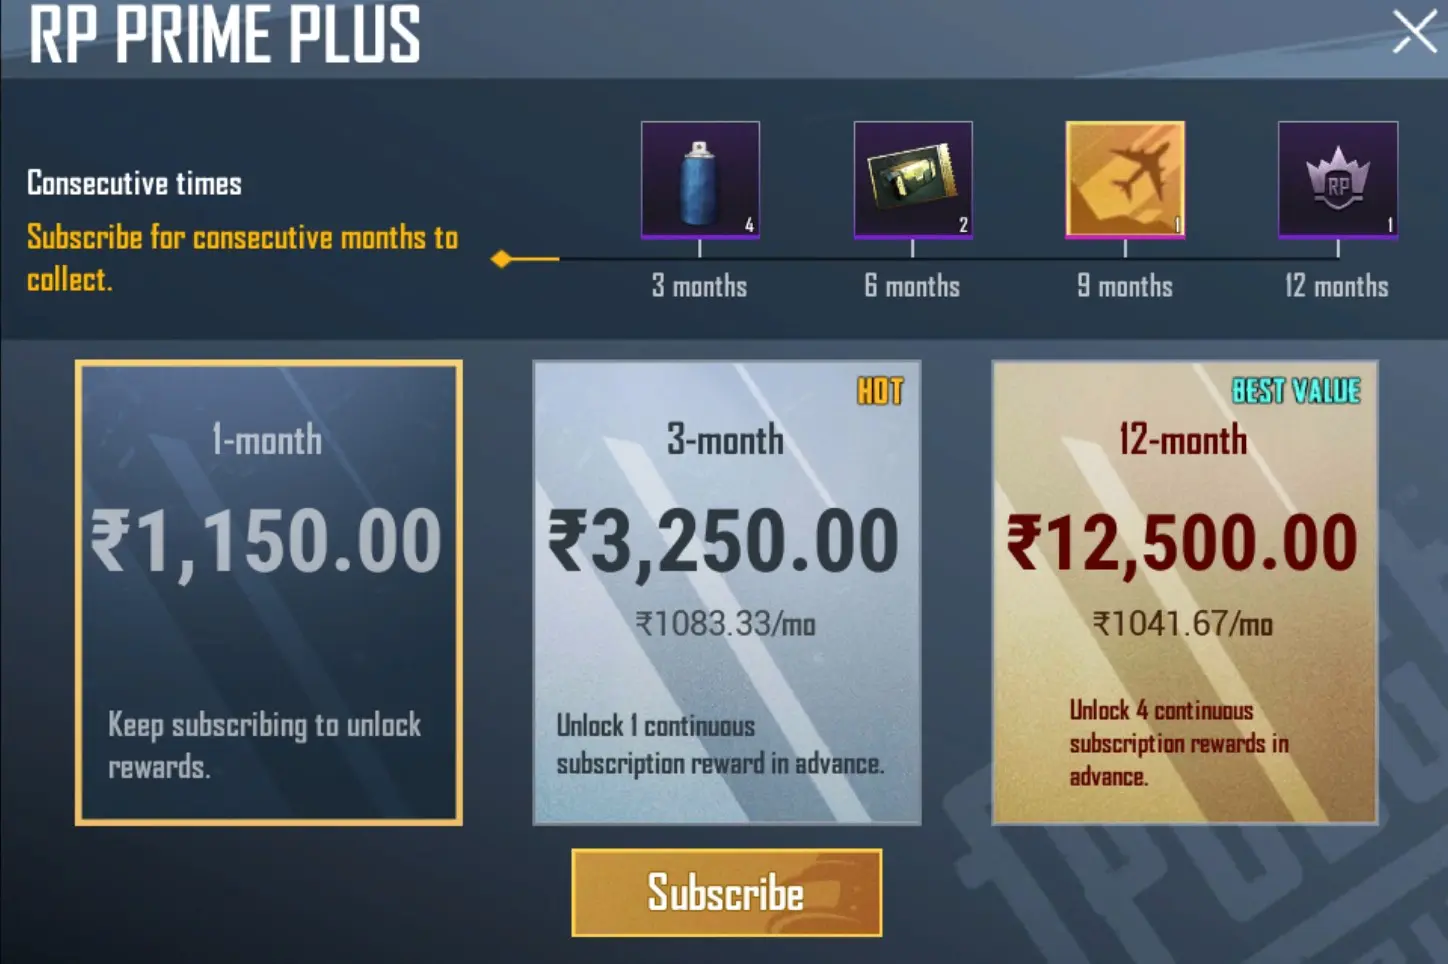 RP Prime Plus Subscription Price